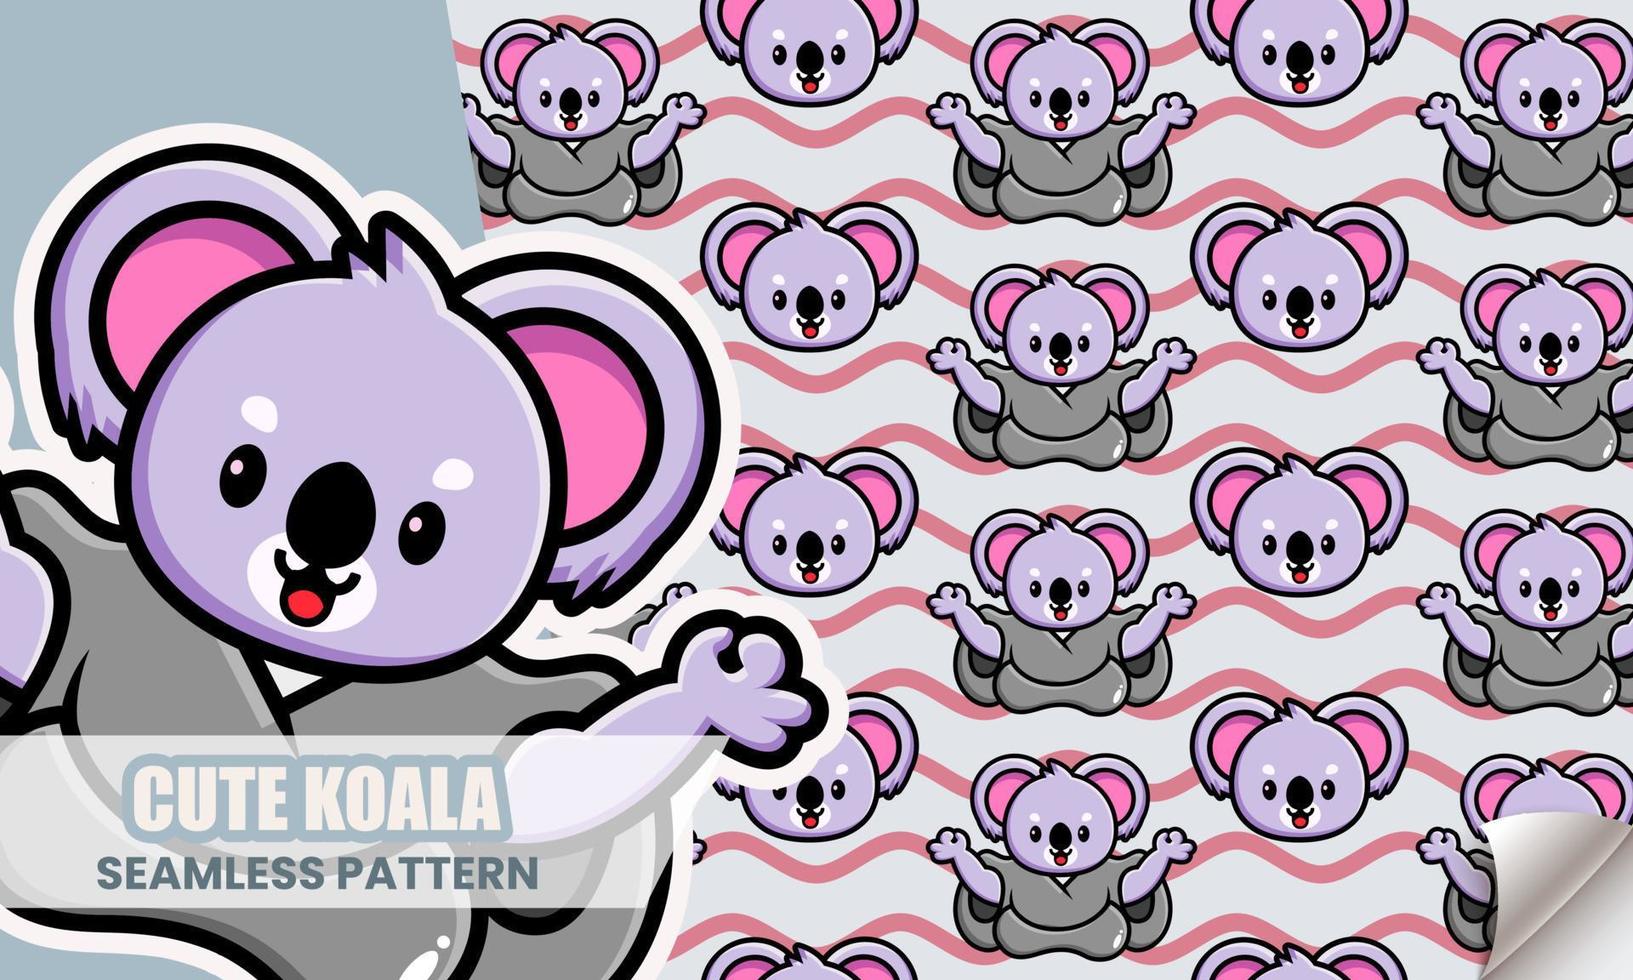 söt koala yoga tecknade seamless mönster vektor